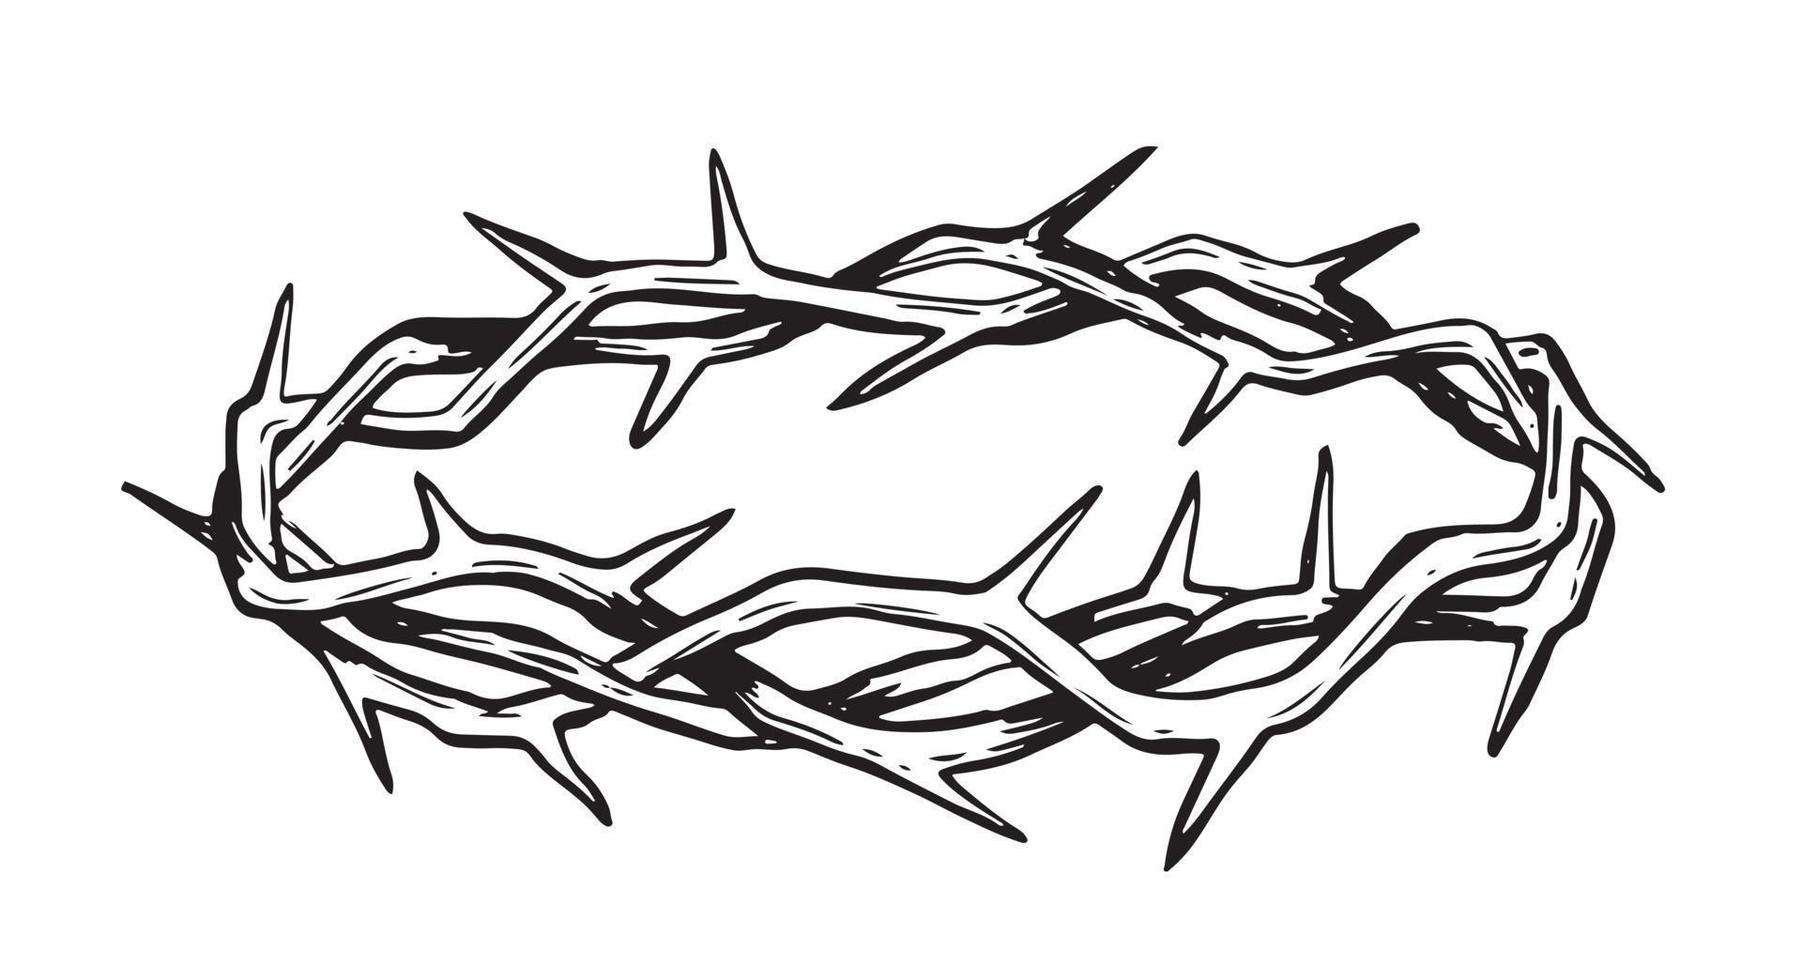 corona de espinas ilustración dibujada a mano sobre fondo blanco. vector